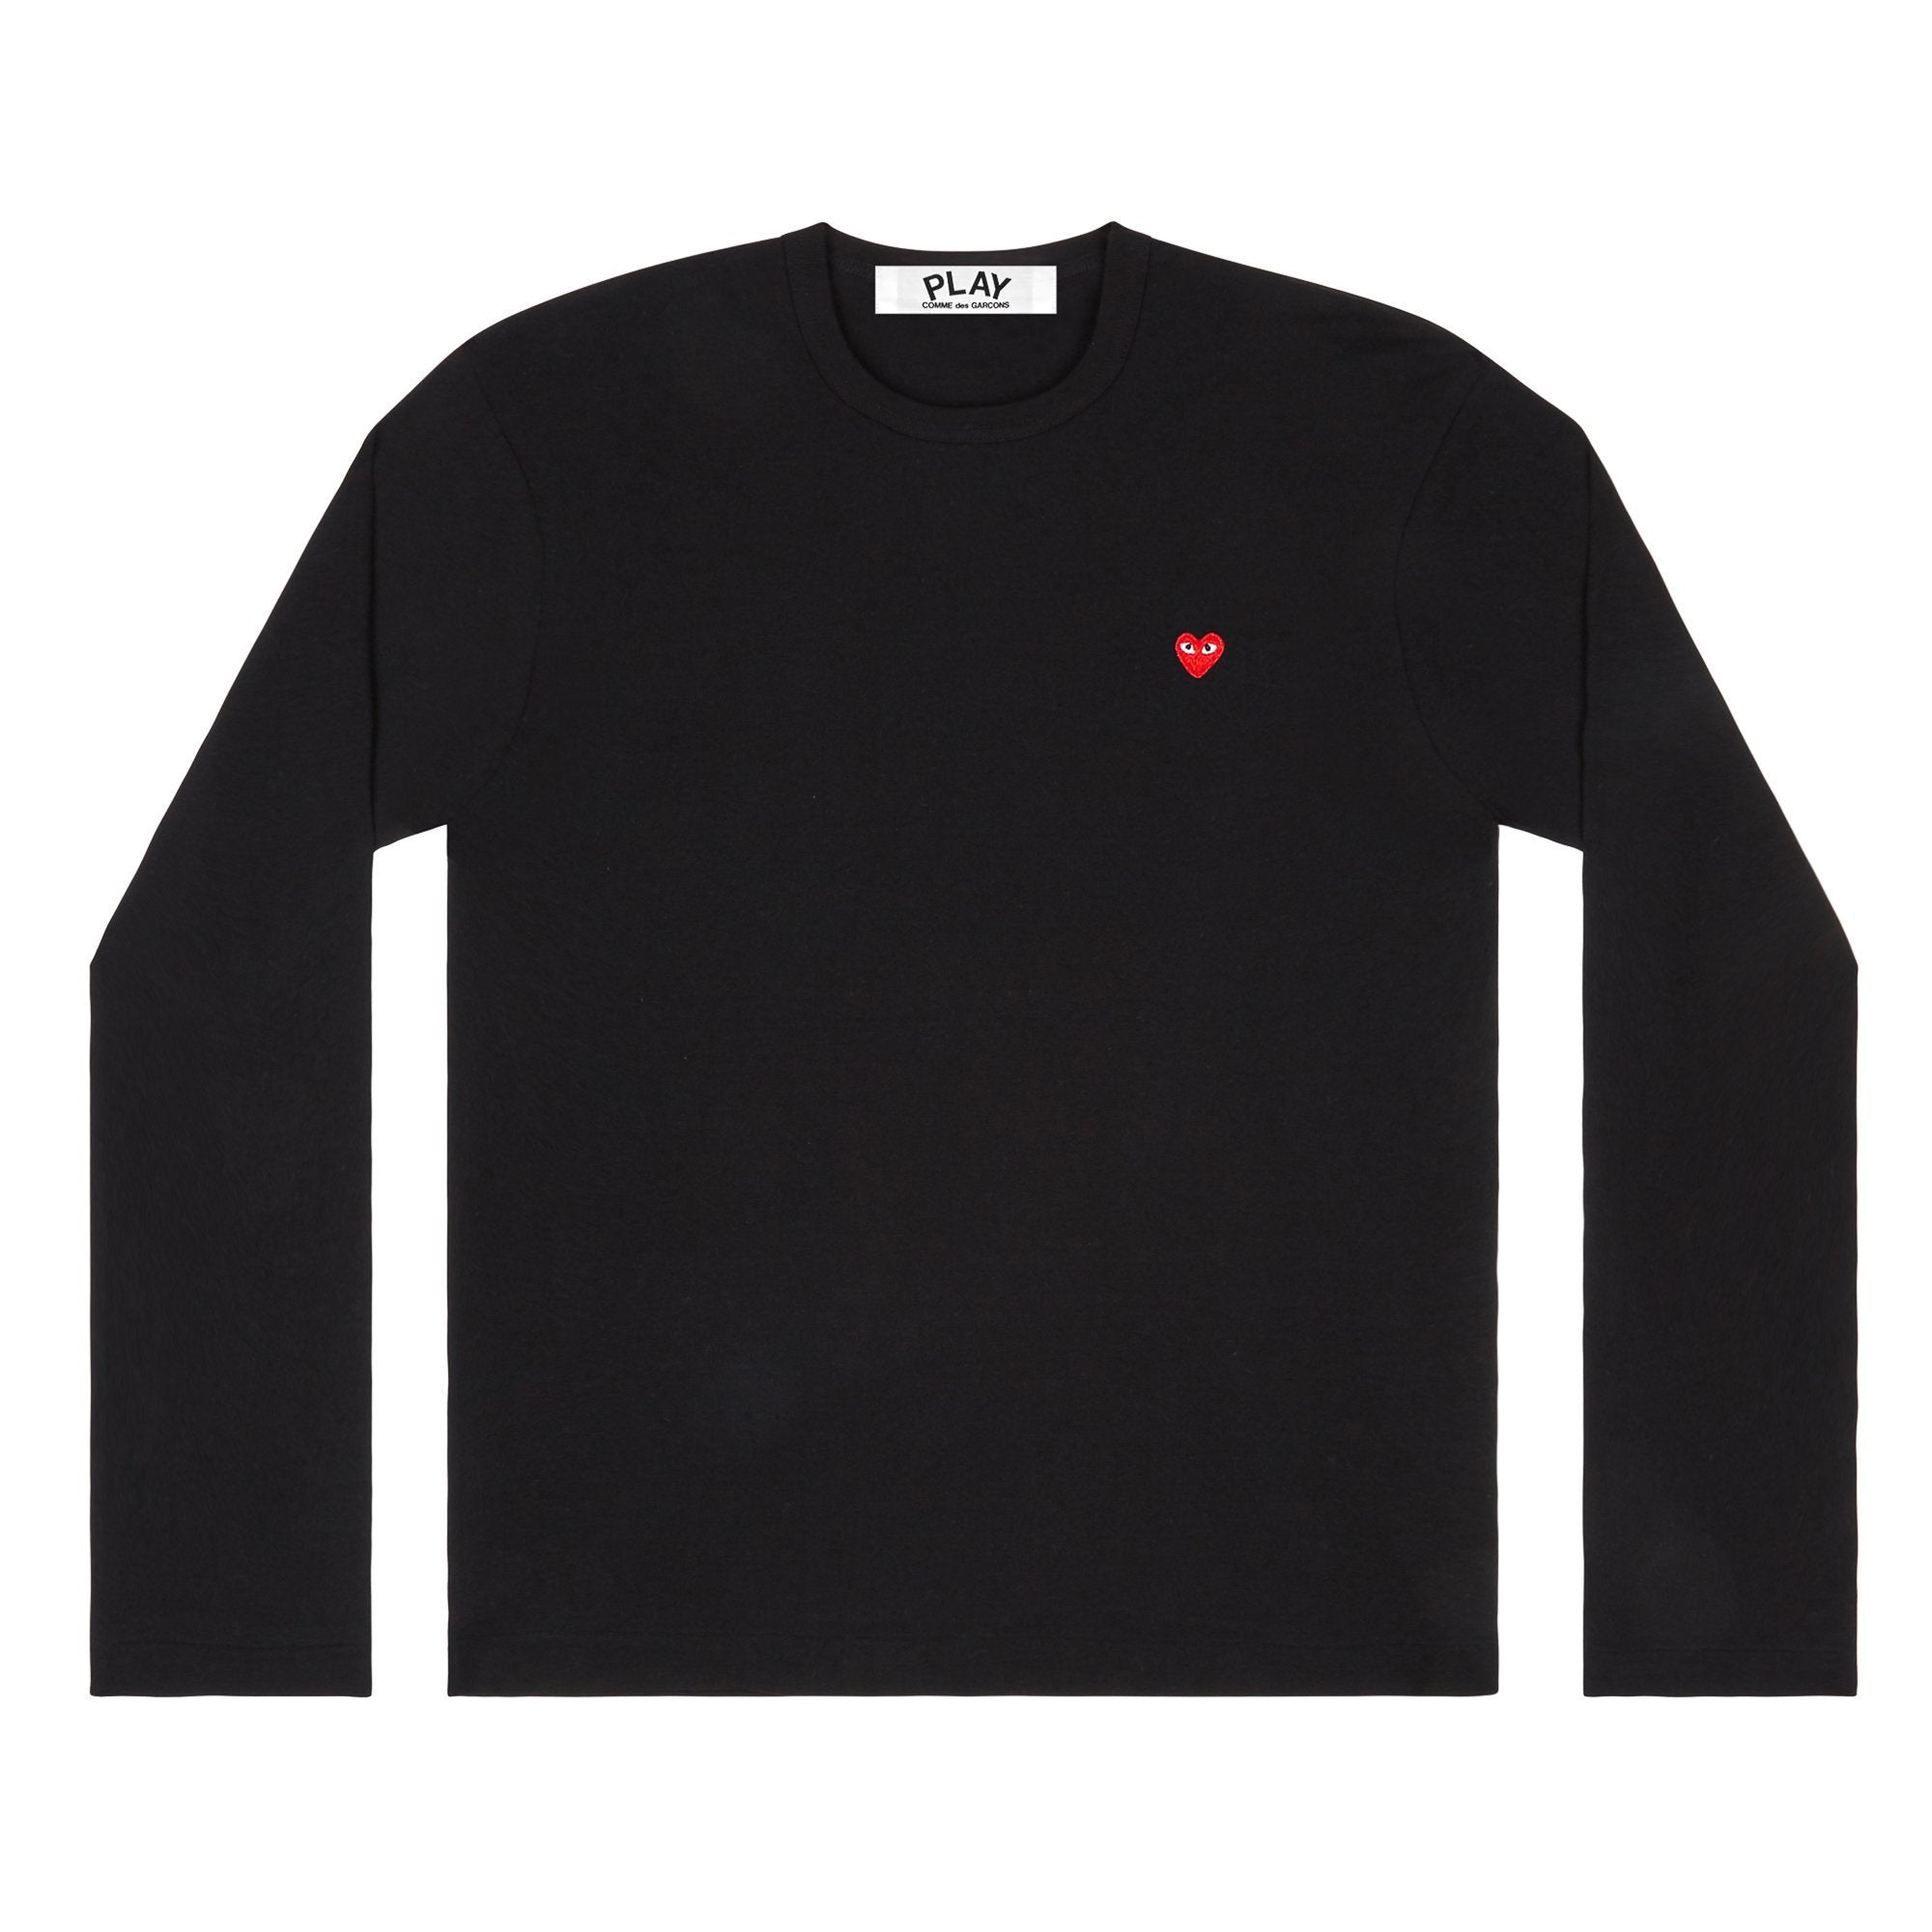 PLAY L/S Basic T-Shirt Small Red Emblem (Black)